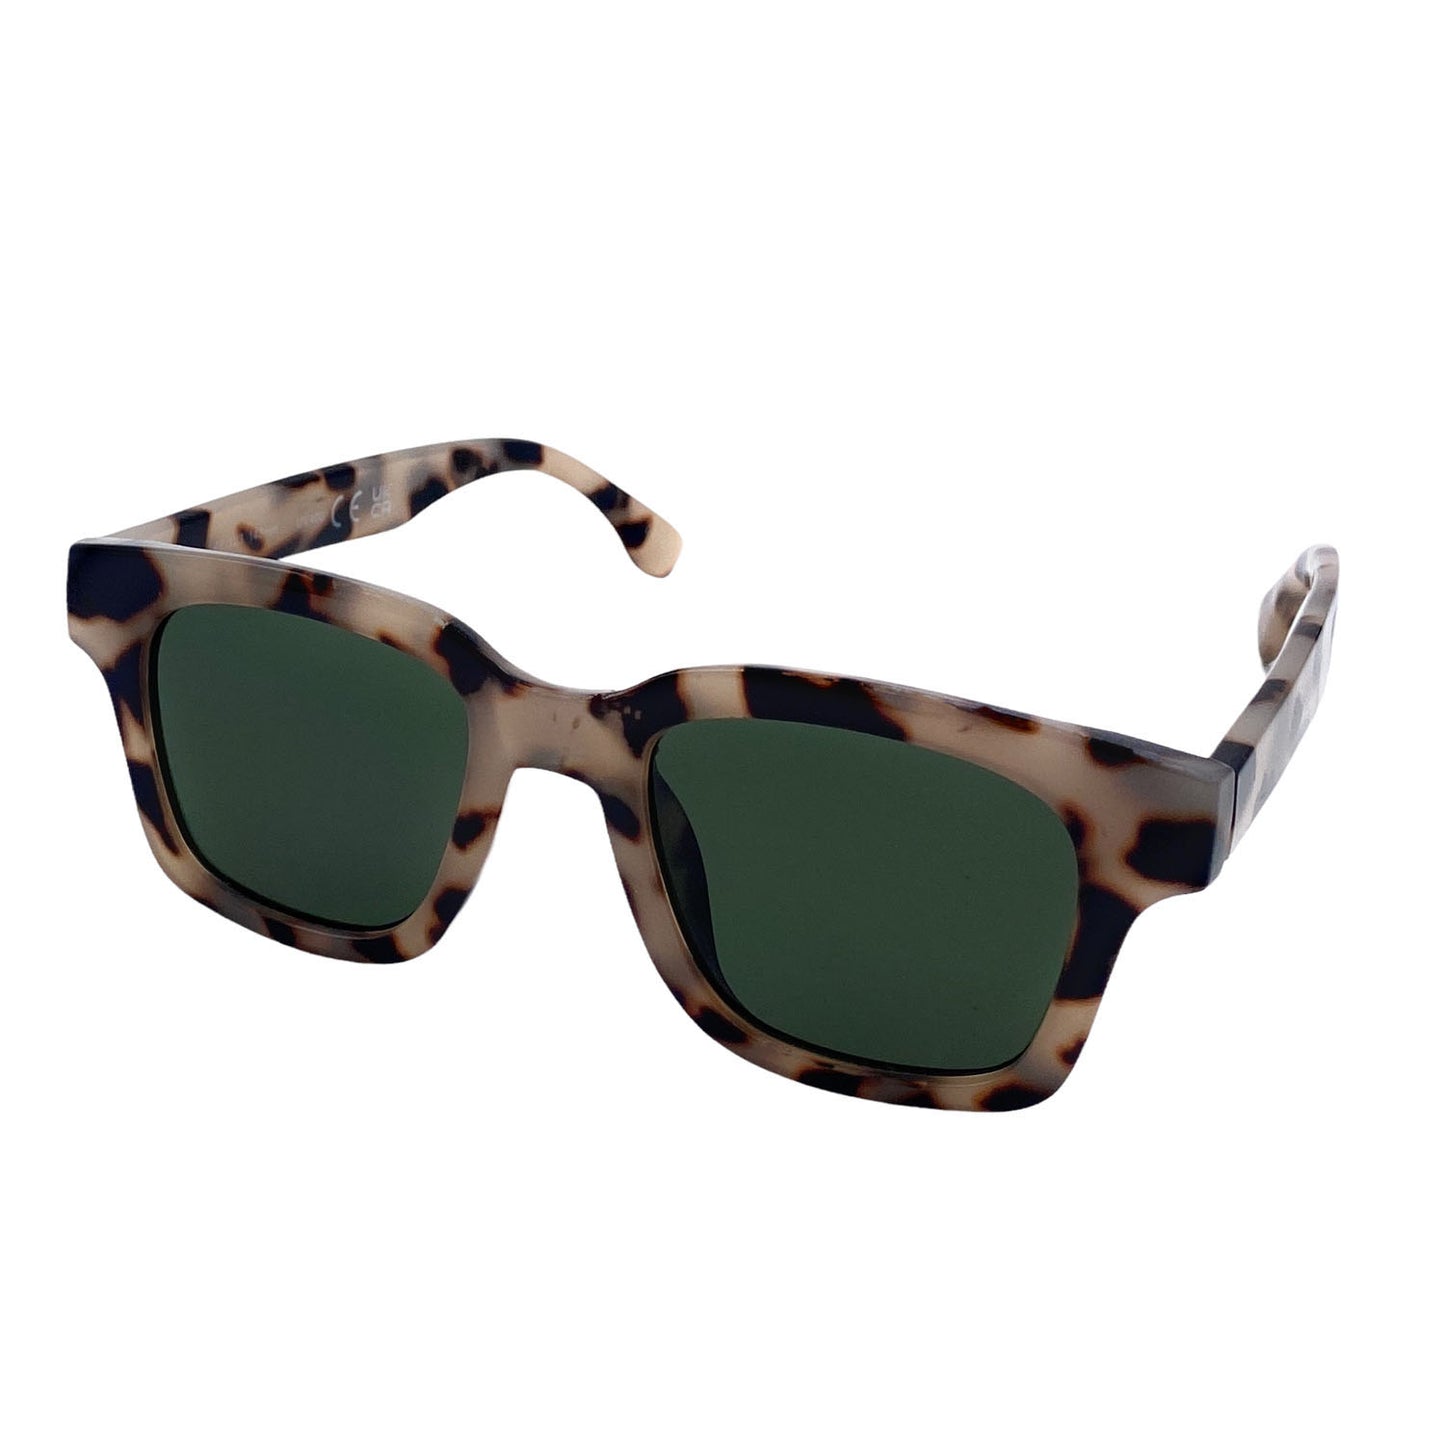 Empire Cove Classic Square Sunglasses Retro Trendy Sunnies Shades UV Protection